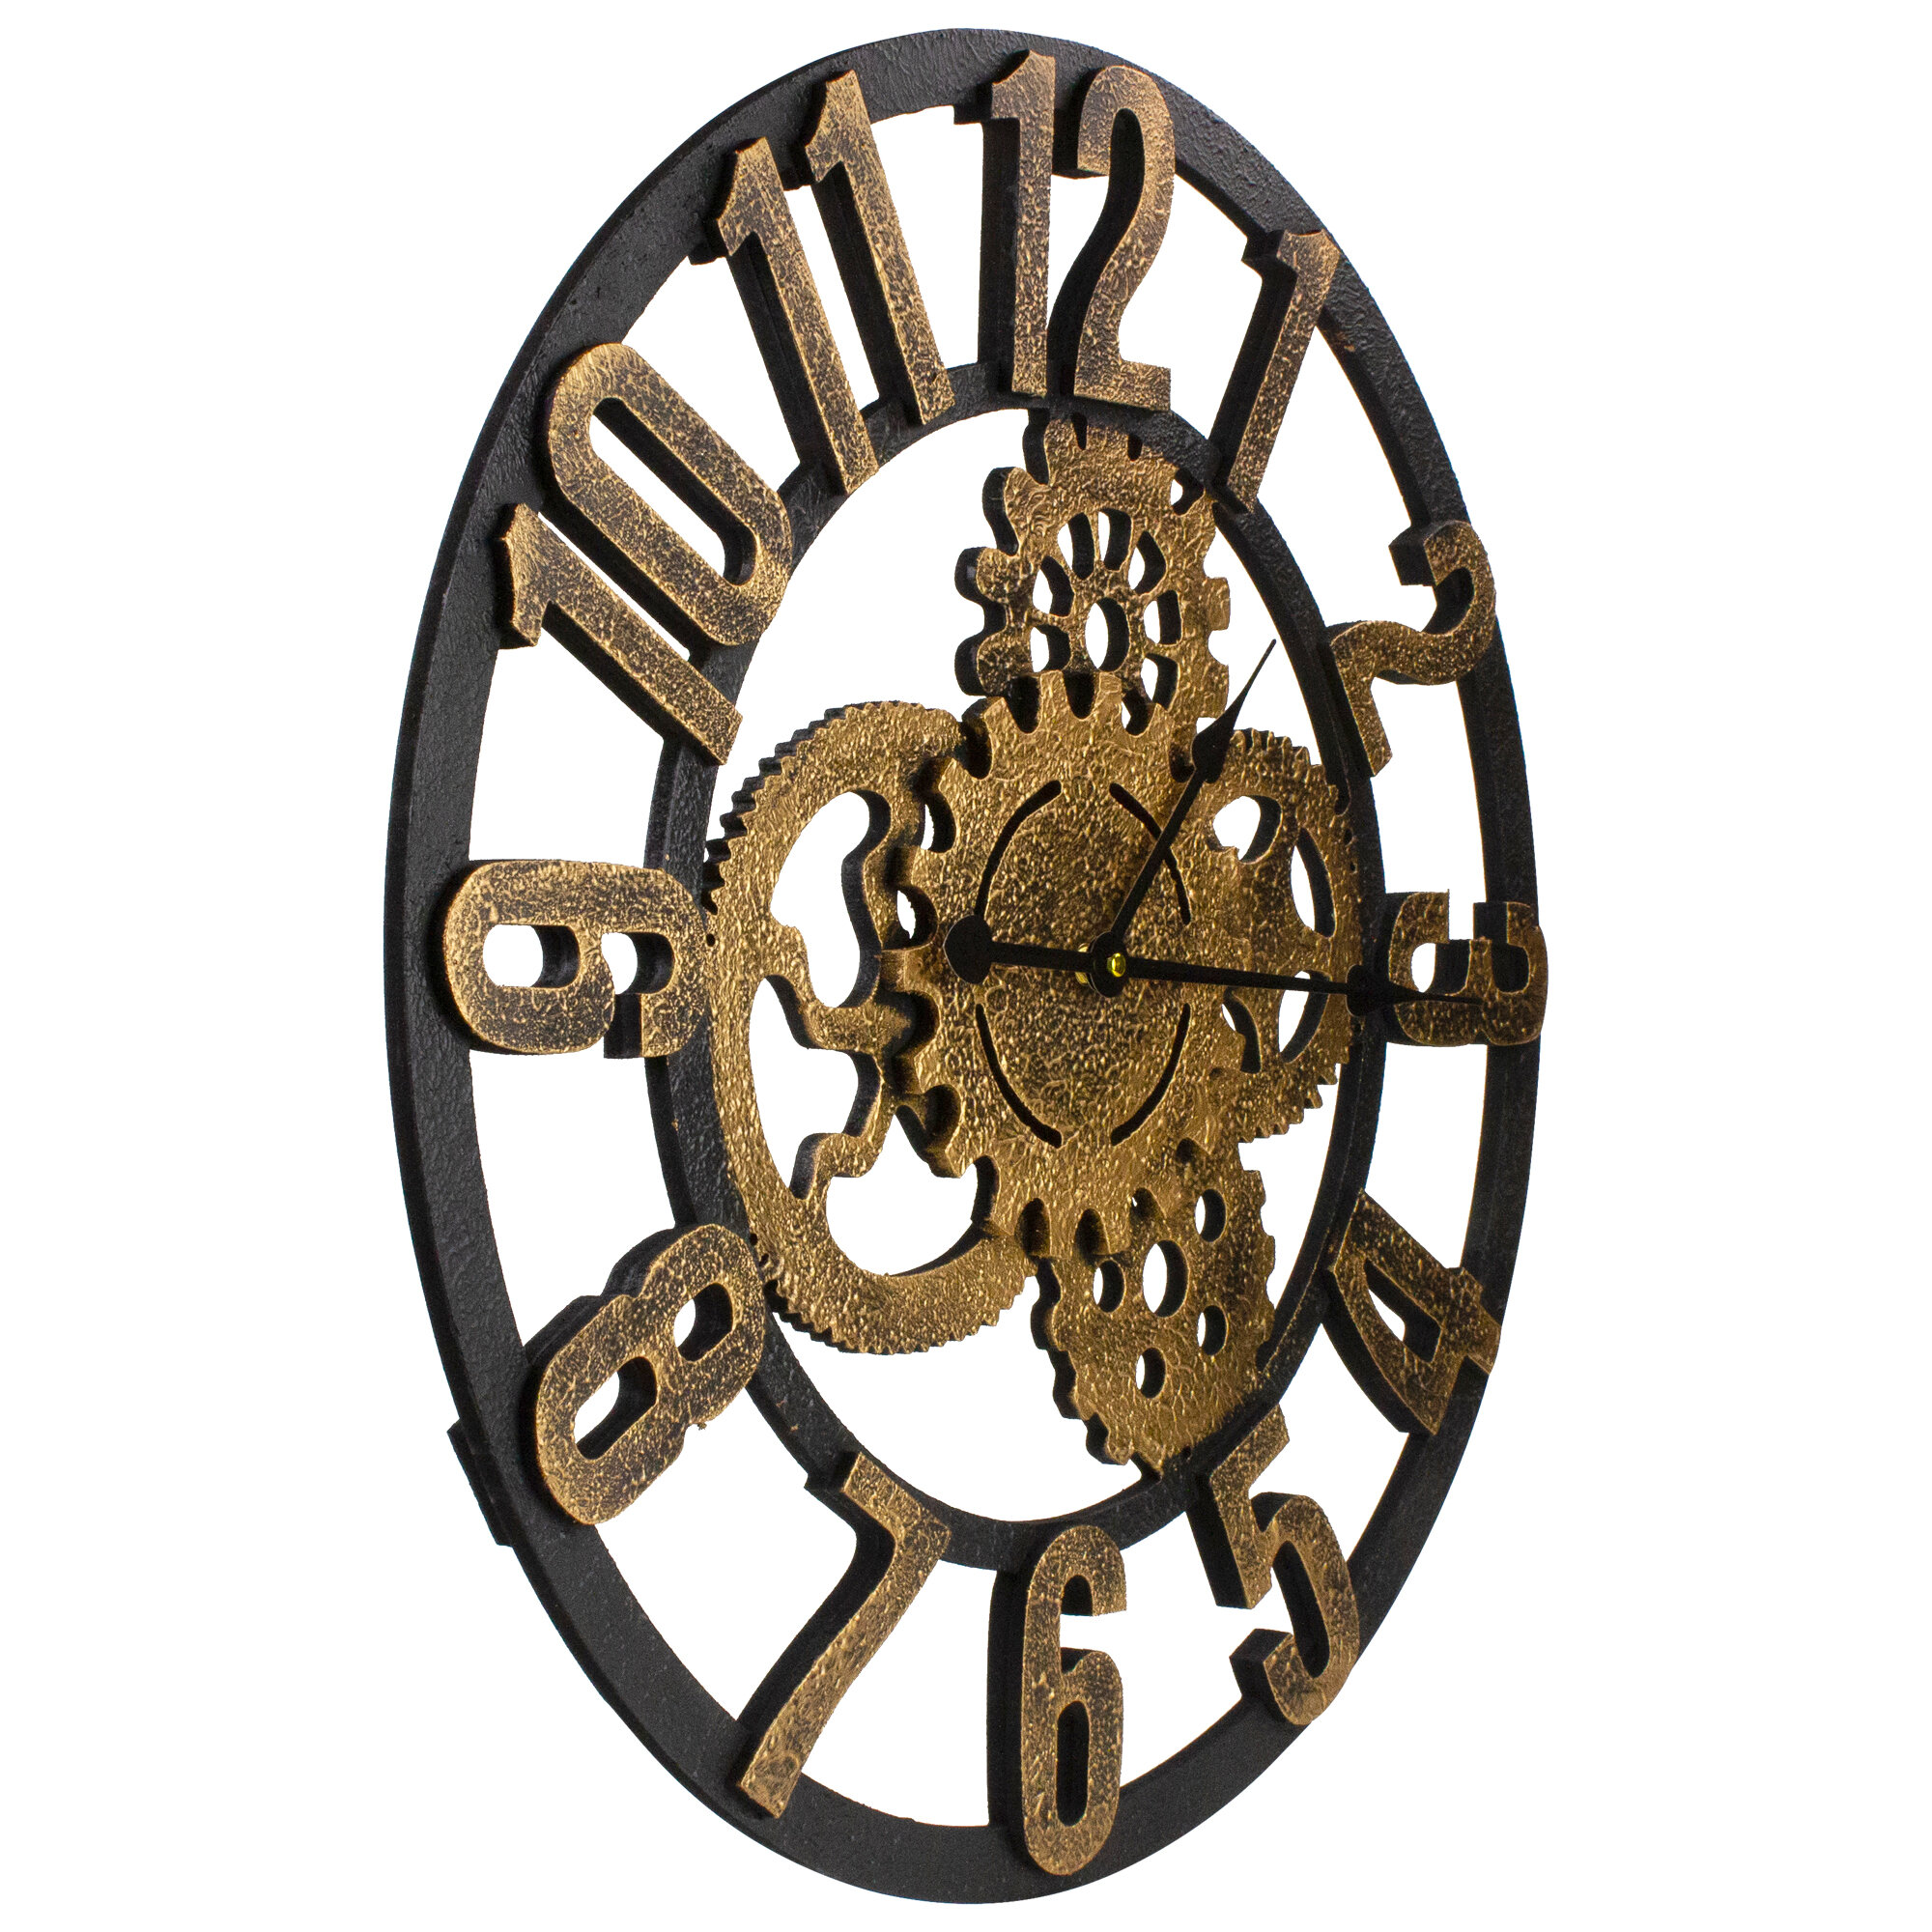 Unusual Clock with Gears ( Steampunk ) Wall Clock